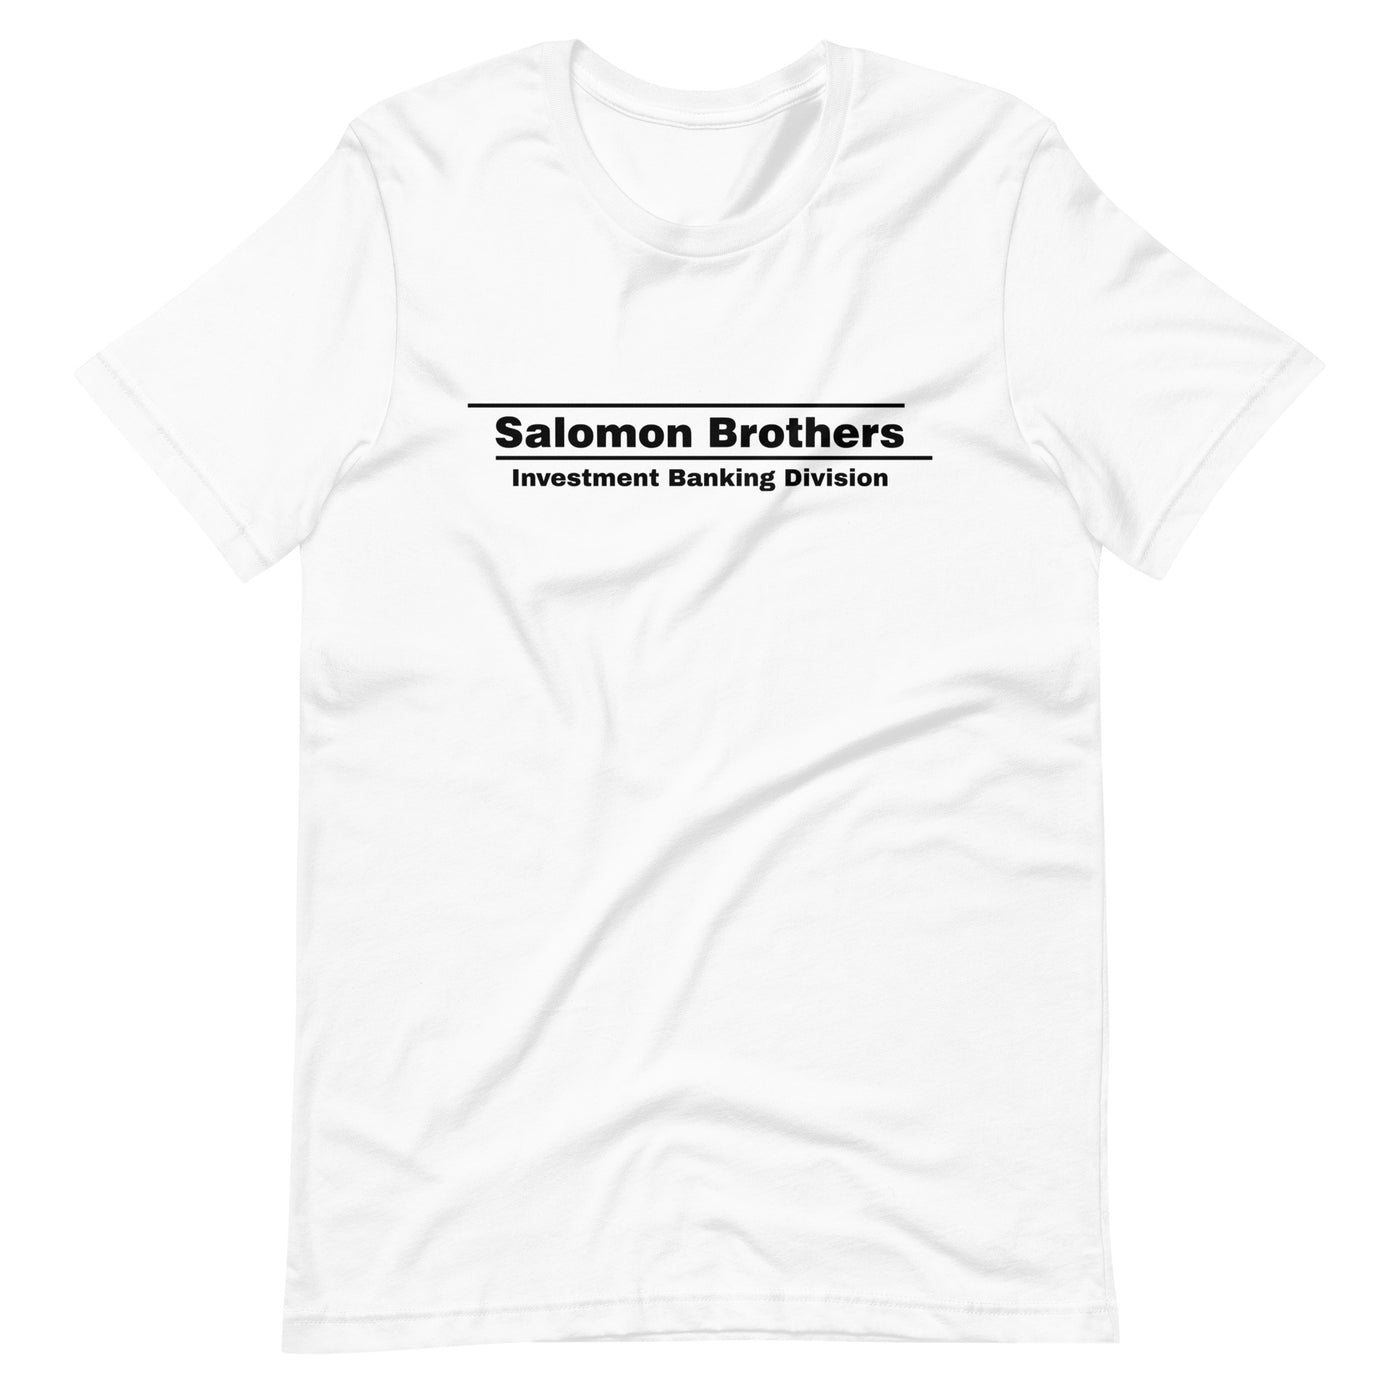 Salomon IBD T Shirt - Arbitrage Andy